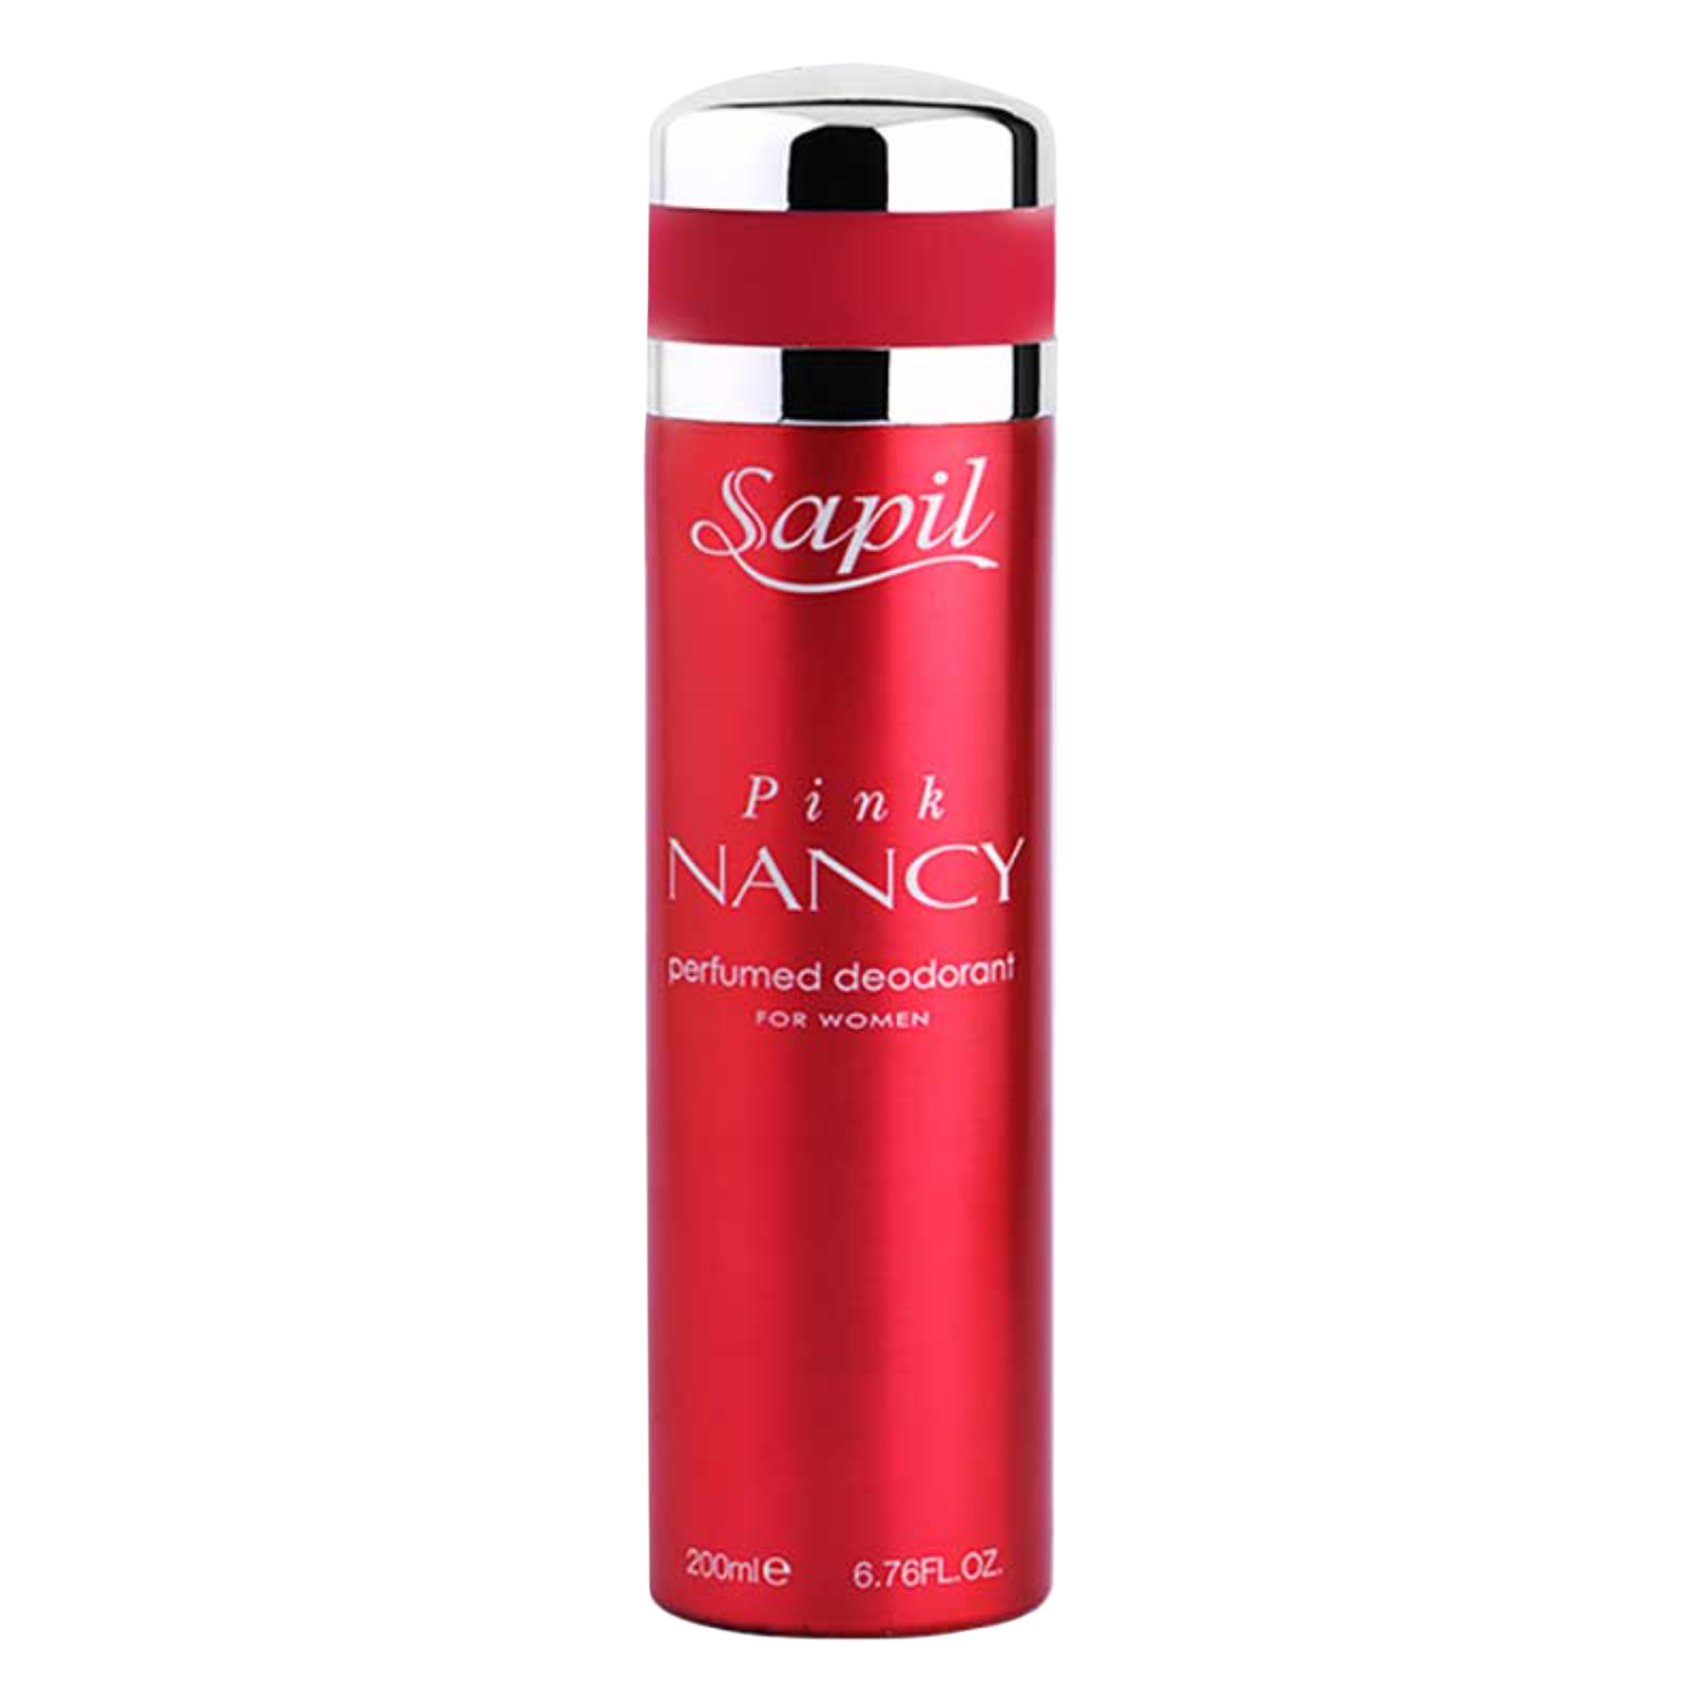 Sapil Pink Nancy Women Perfumed Deodorant 200ml